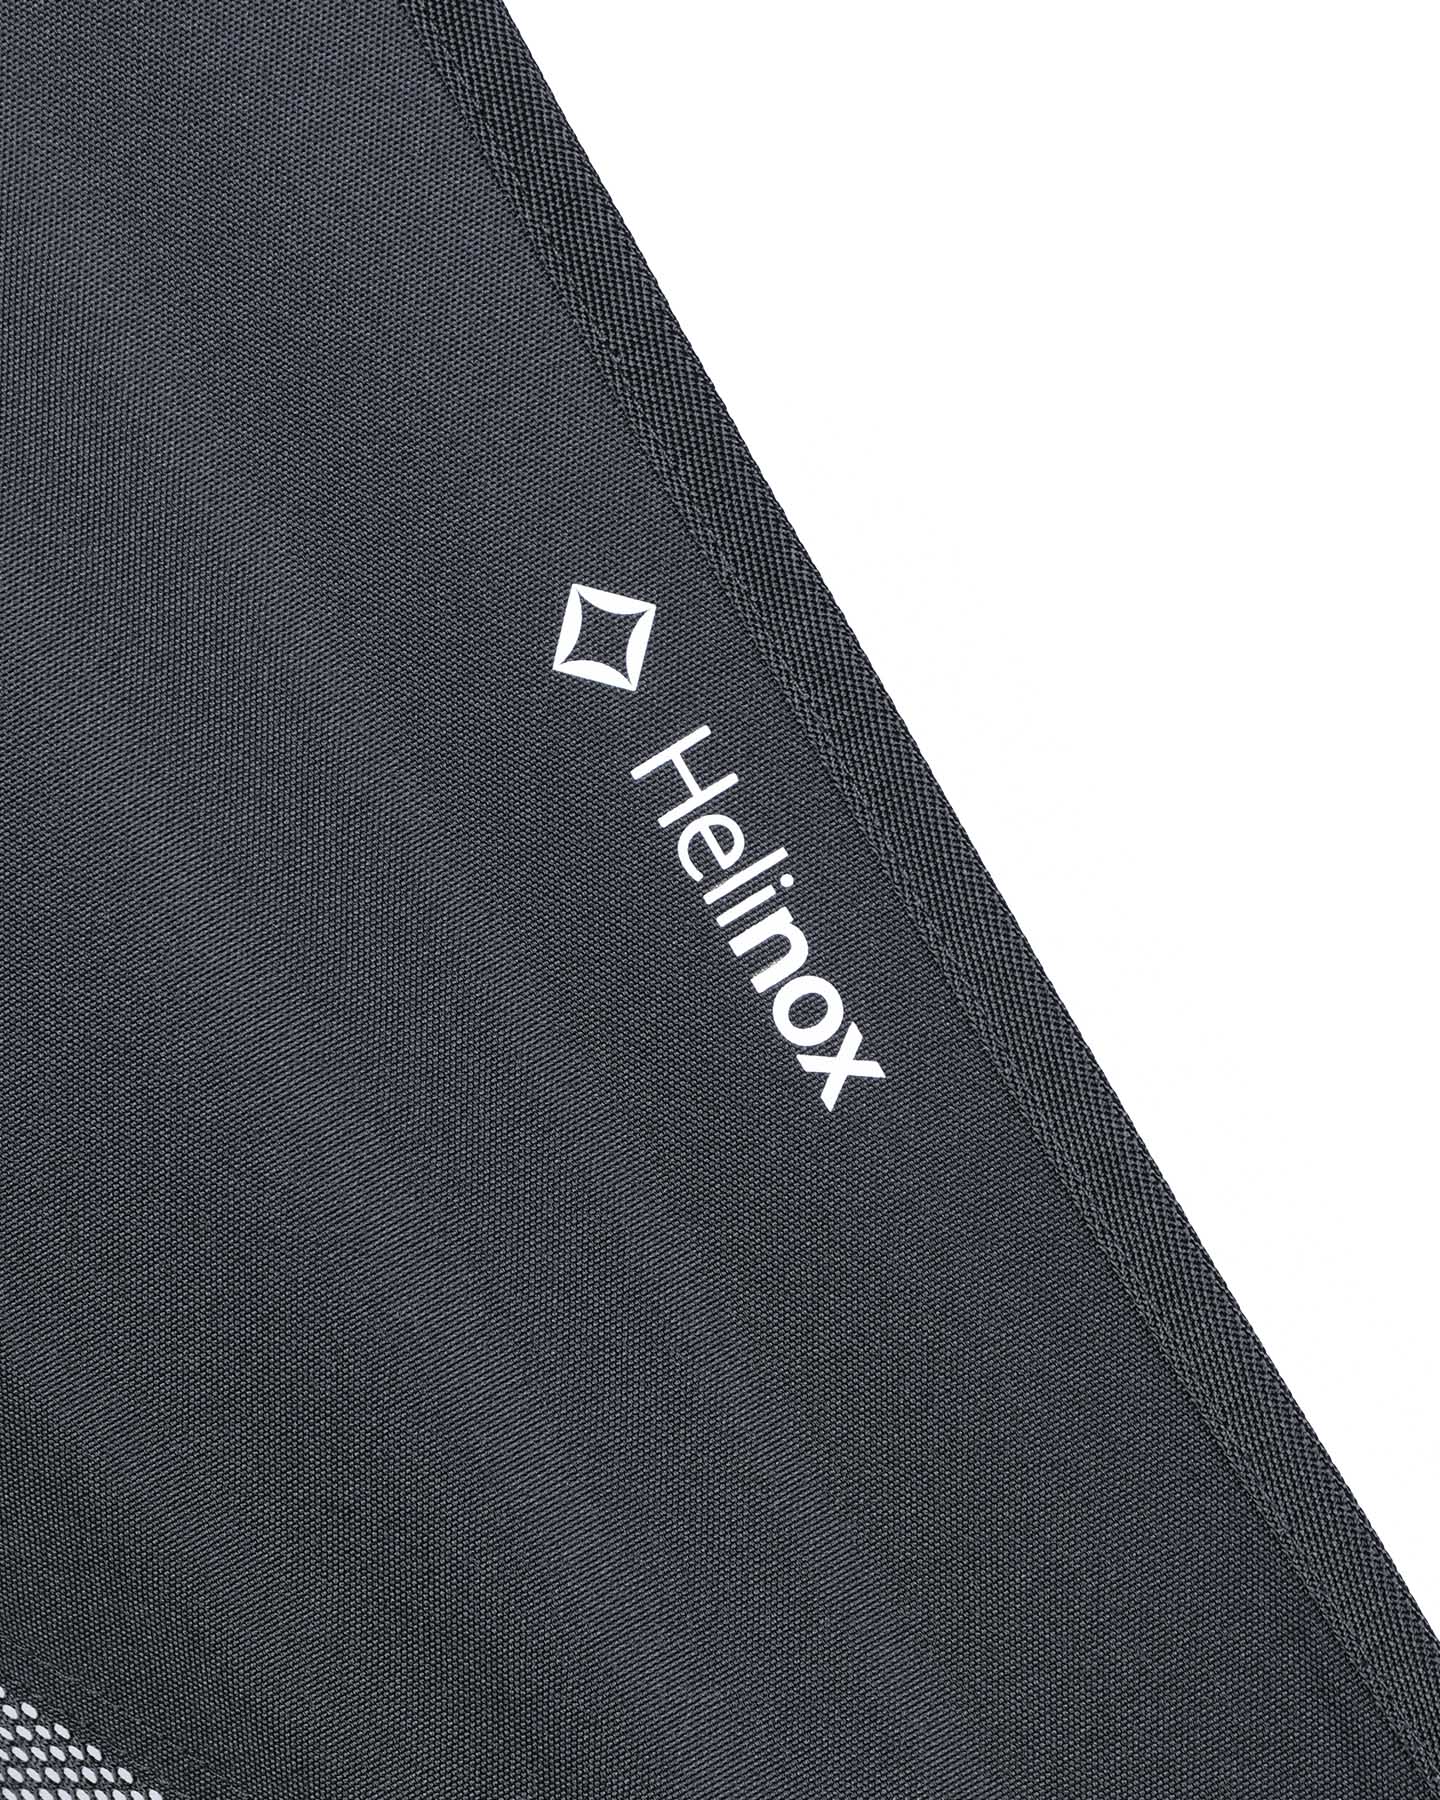 SOPH. | Helinox F.C.R.B. CHAIR XL(FREE BLACK):